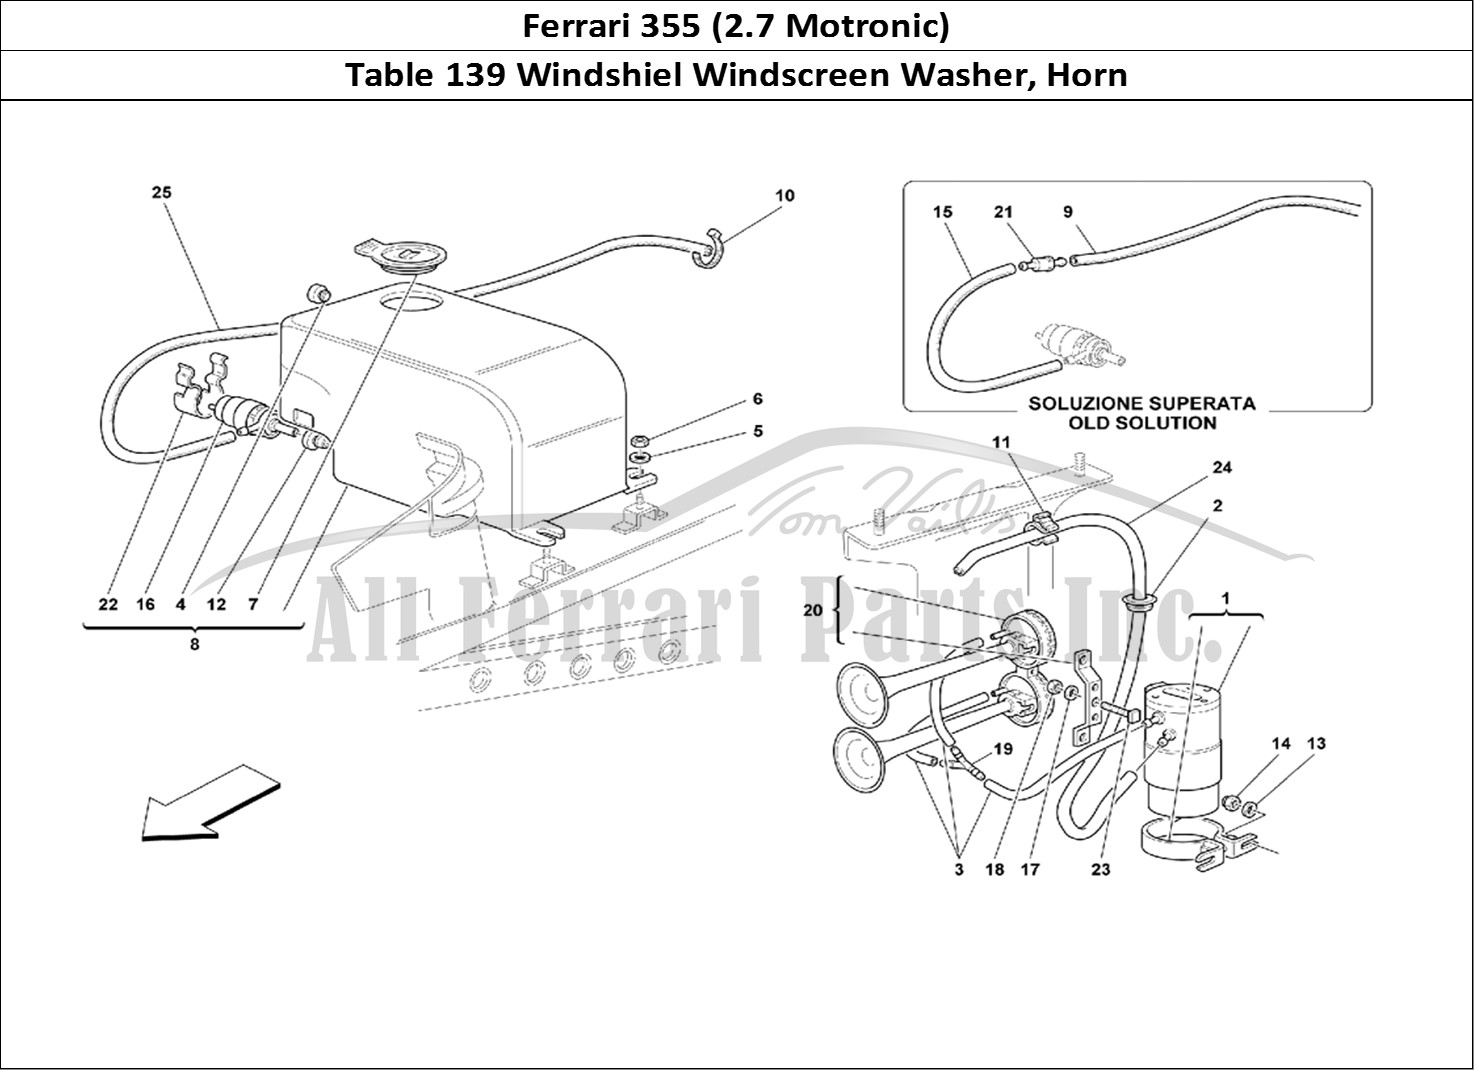 Ferrari Parts Ferrari 355 (2.7 Motronic) Page 139 Glass Washer and Horns